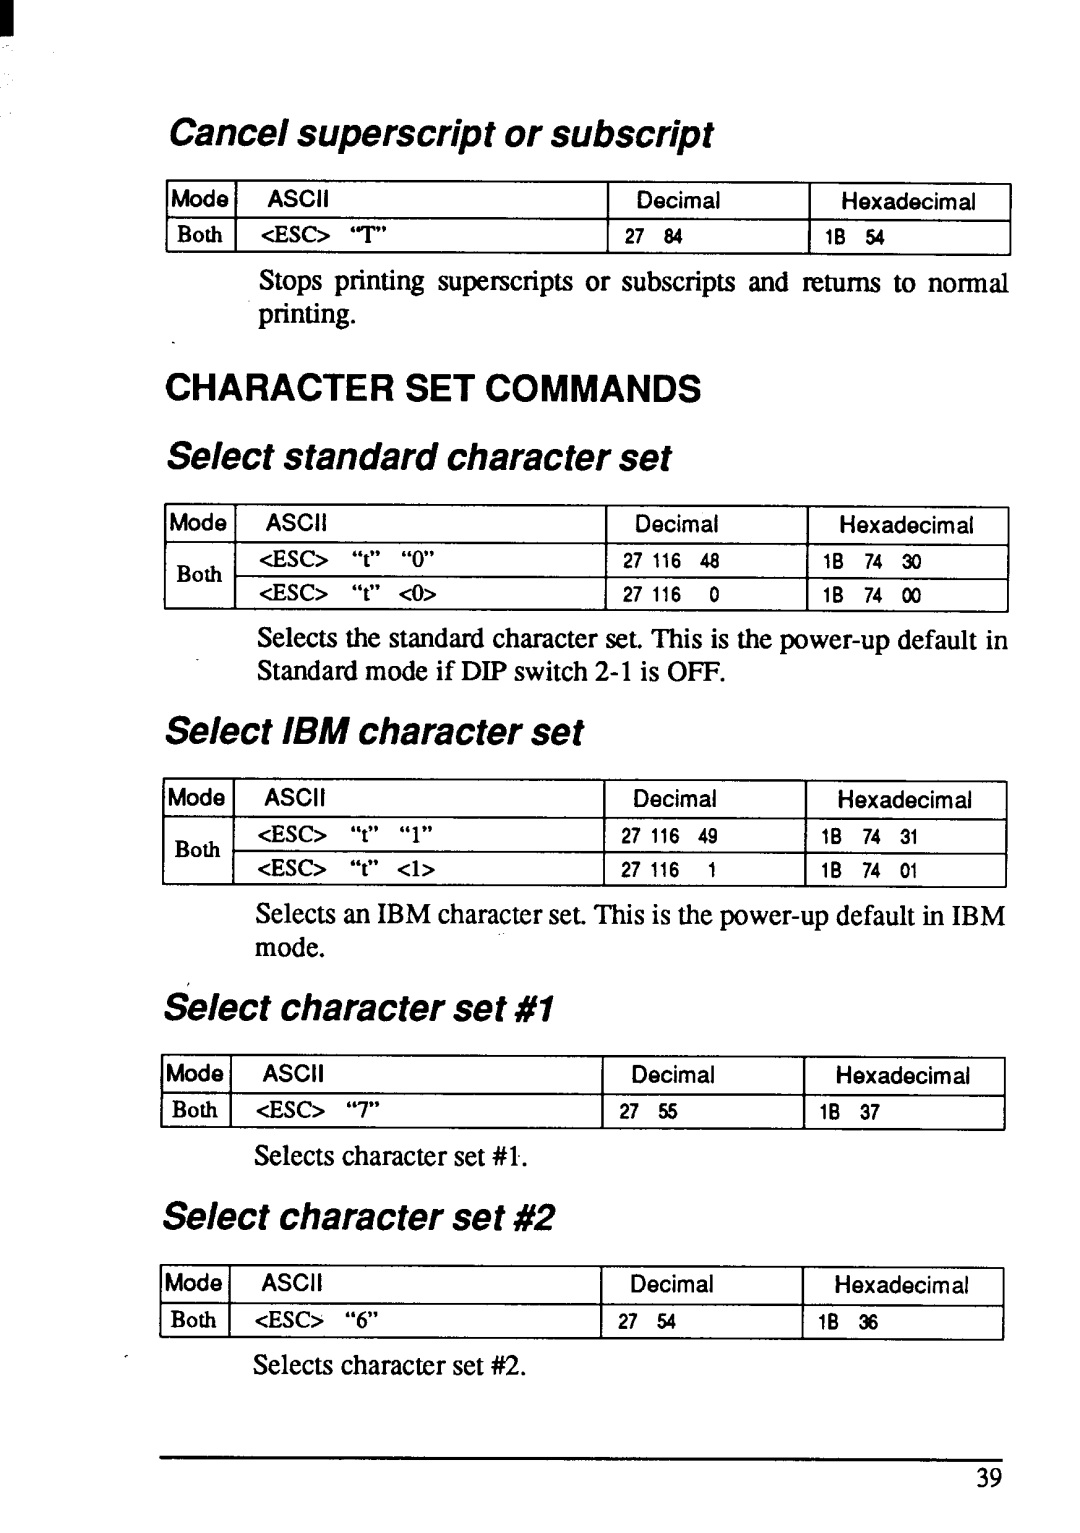 Star Micronics NX-1001 manual Cancelsuperscriptor subscript, Select standardcharacterset, Select characterset #1, s T i t p 